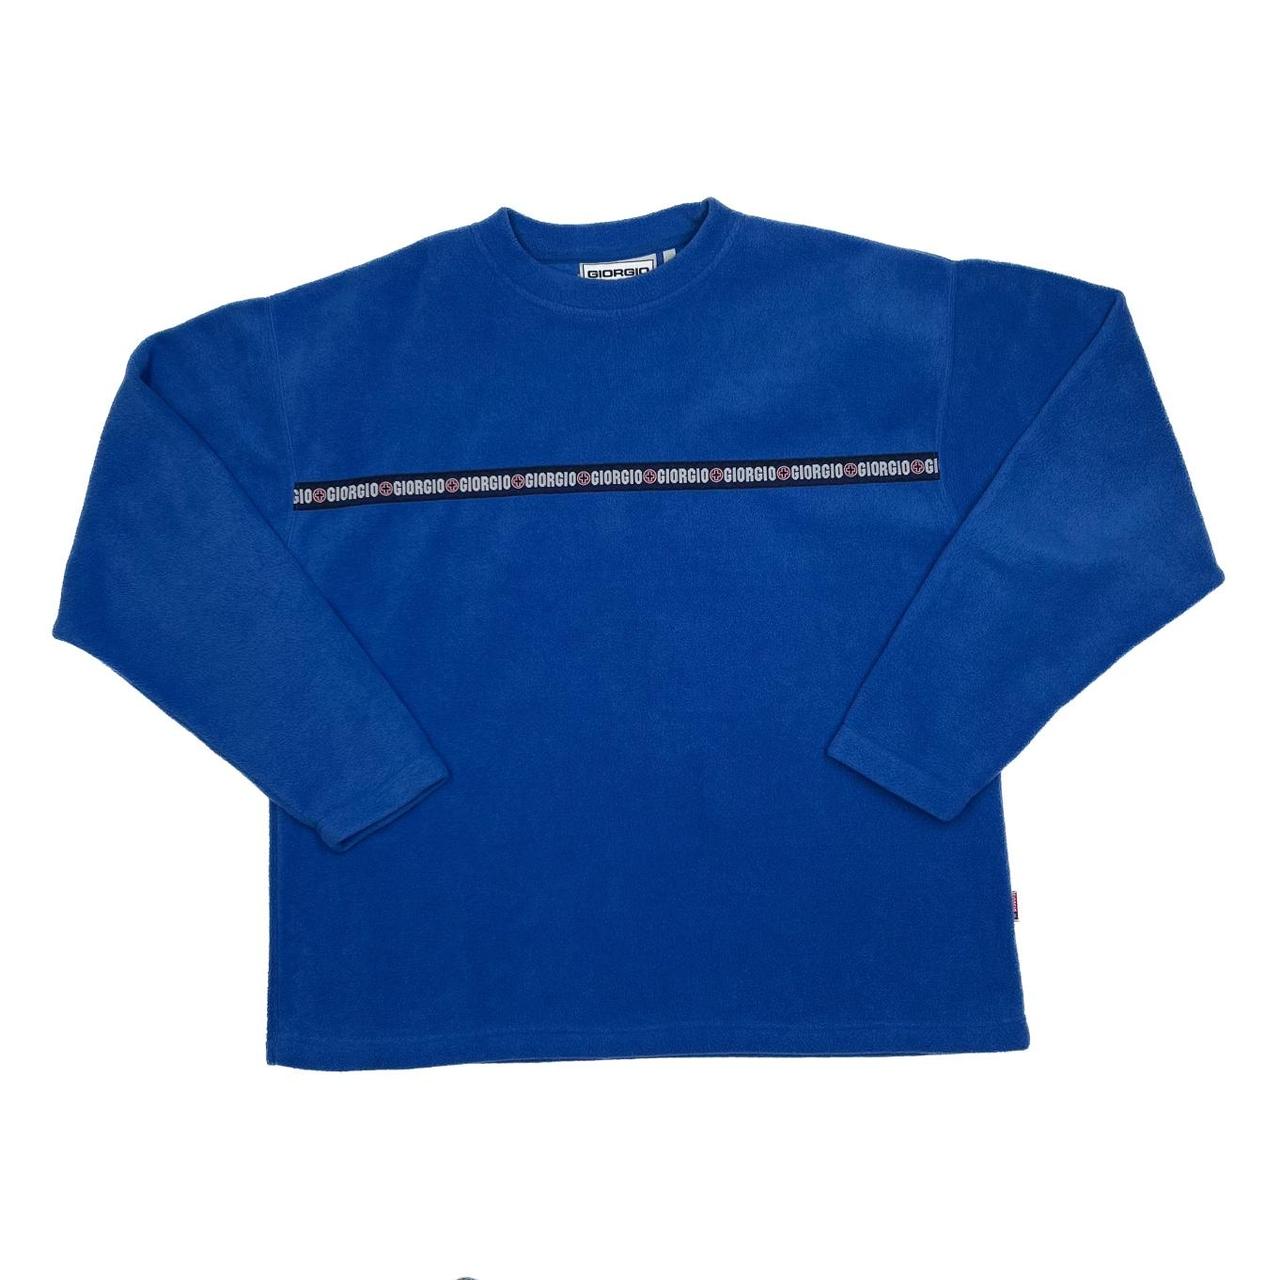 Giorgio Local Boyz Men's Blue Sweatshirt | Depop